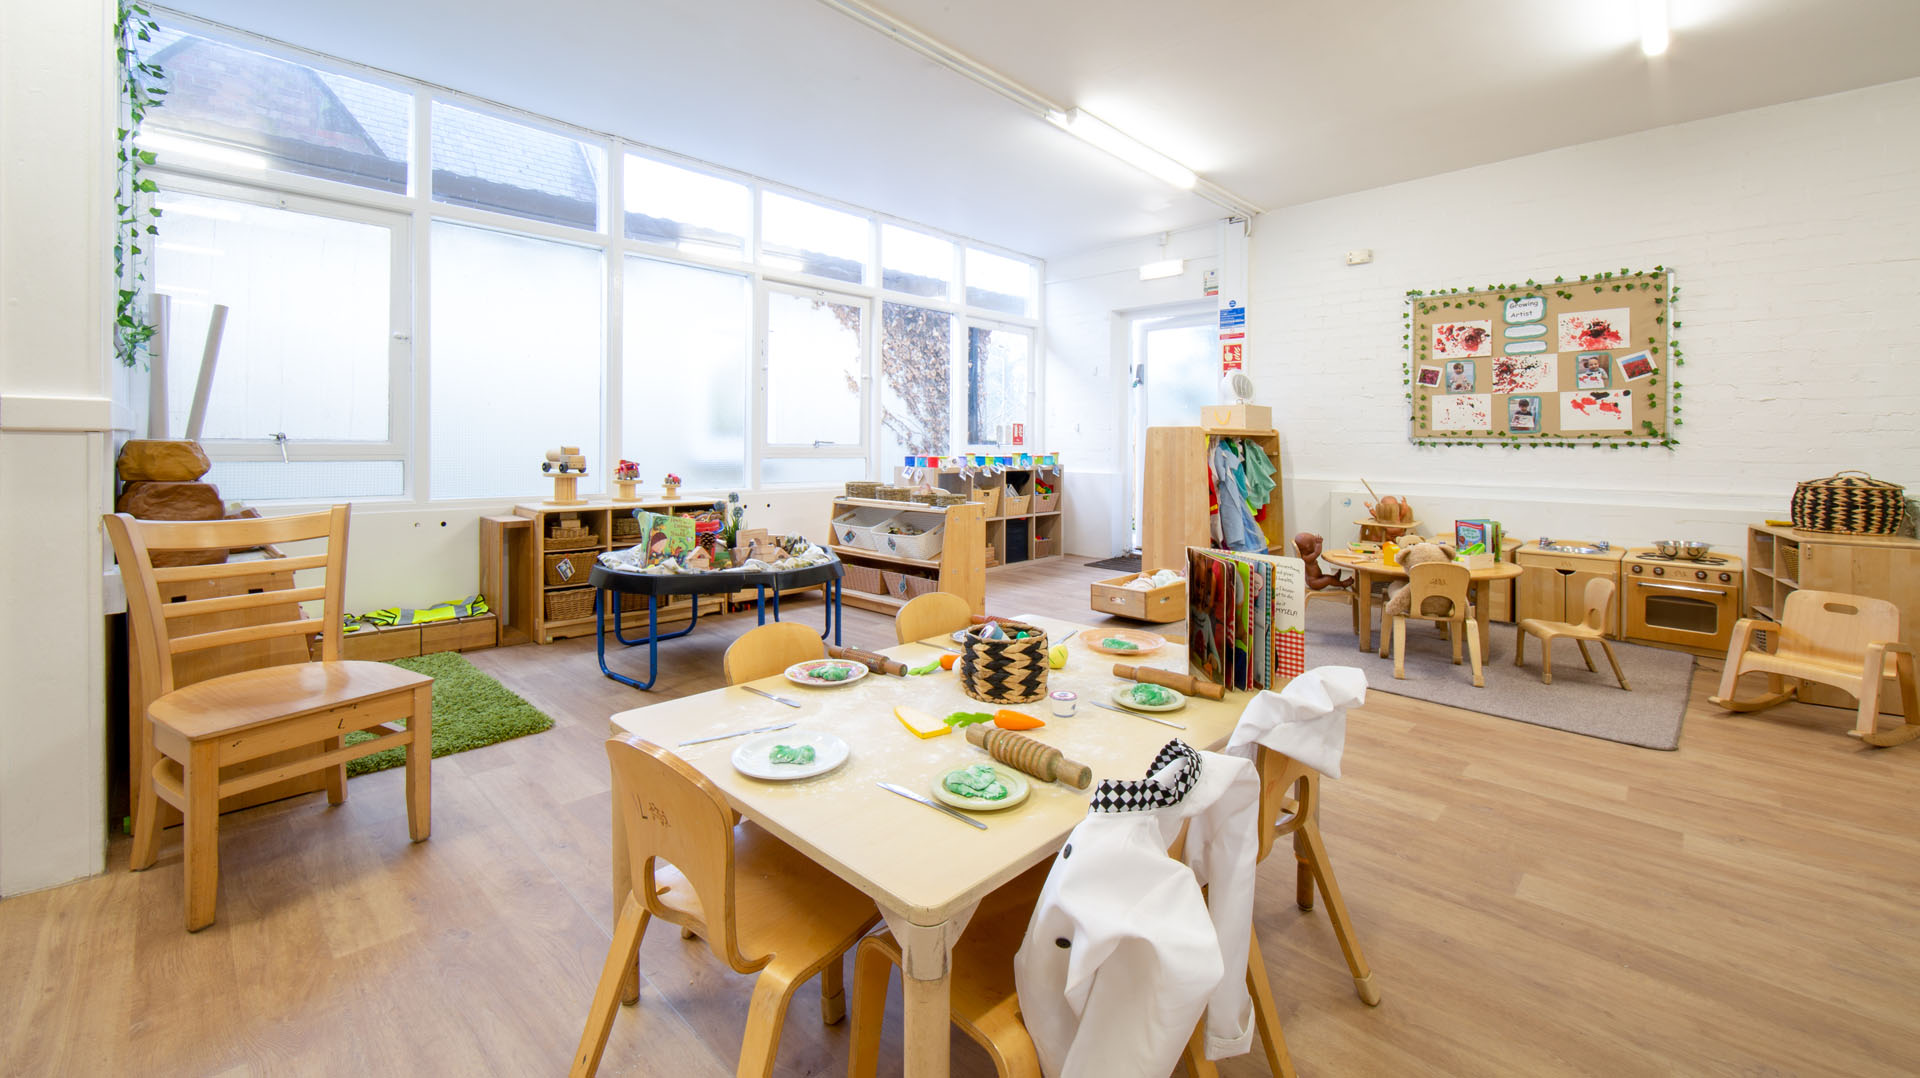 Kenilworth Day Nursery and Preschool Room